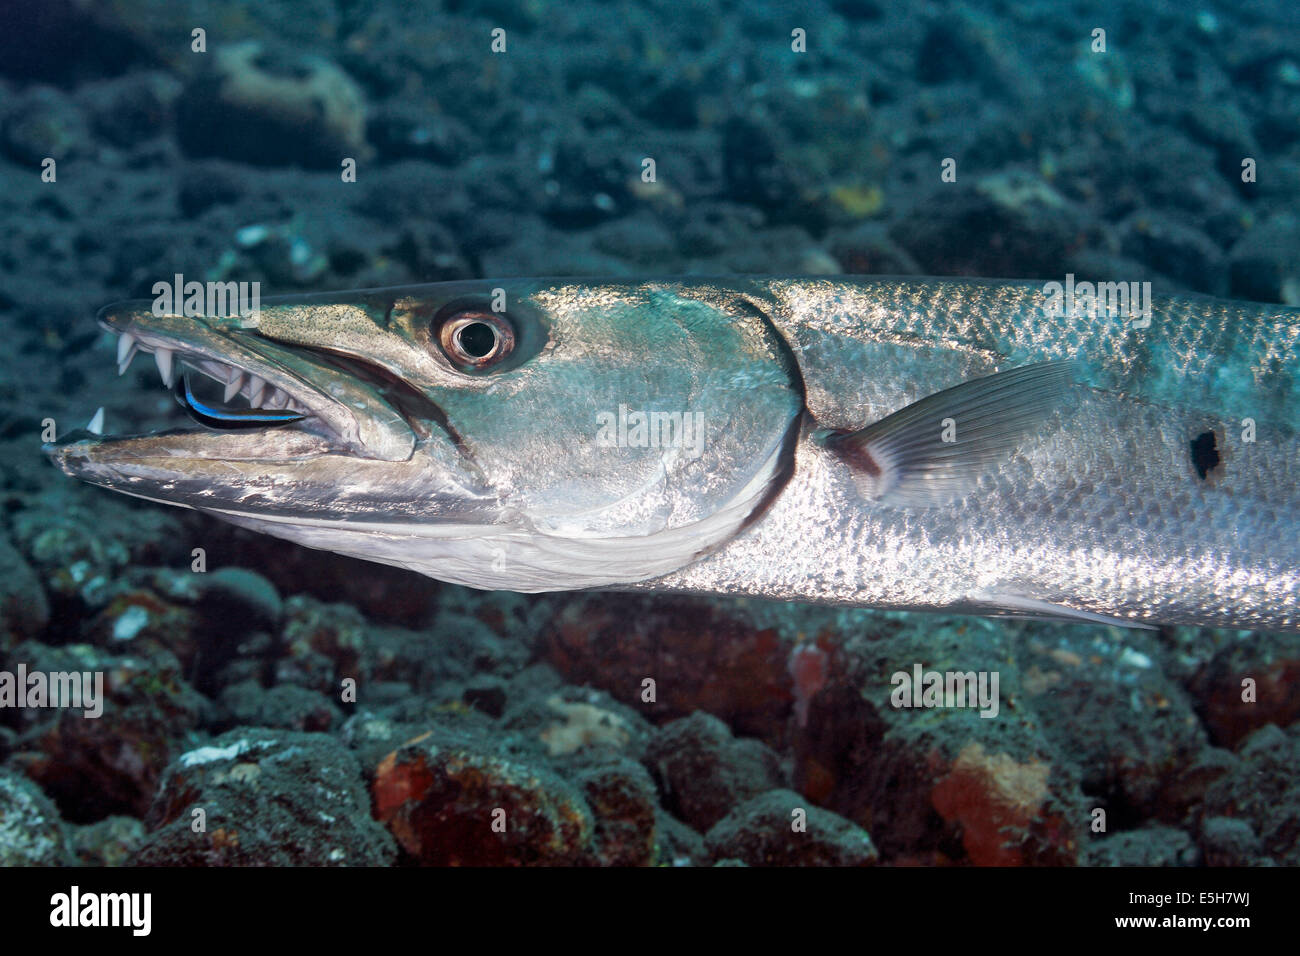 Grande Barracuda, Sphyraena barracuda, avente i suoi denti puliti da una striatura blu Wrasse, Labroides dimidiatus. Tulamben Foto Stock